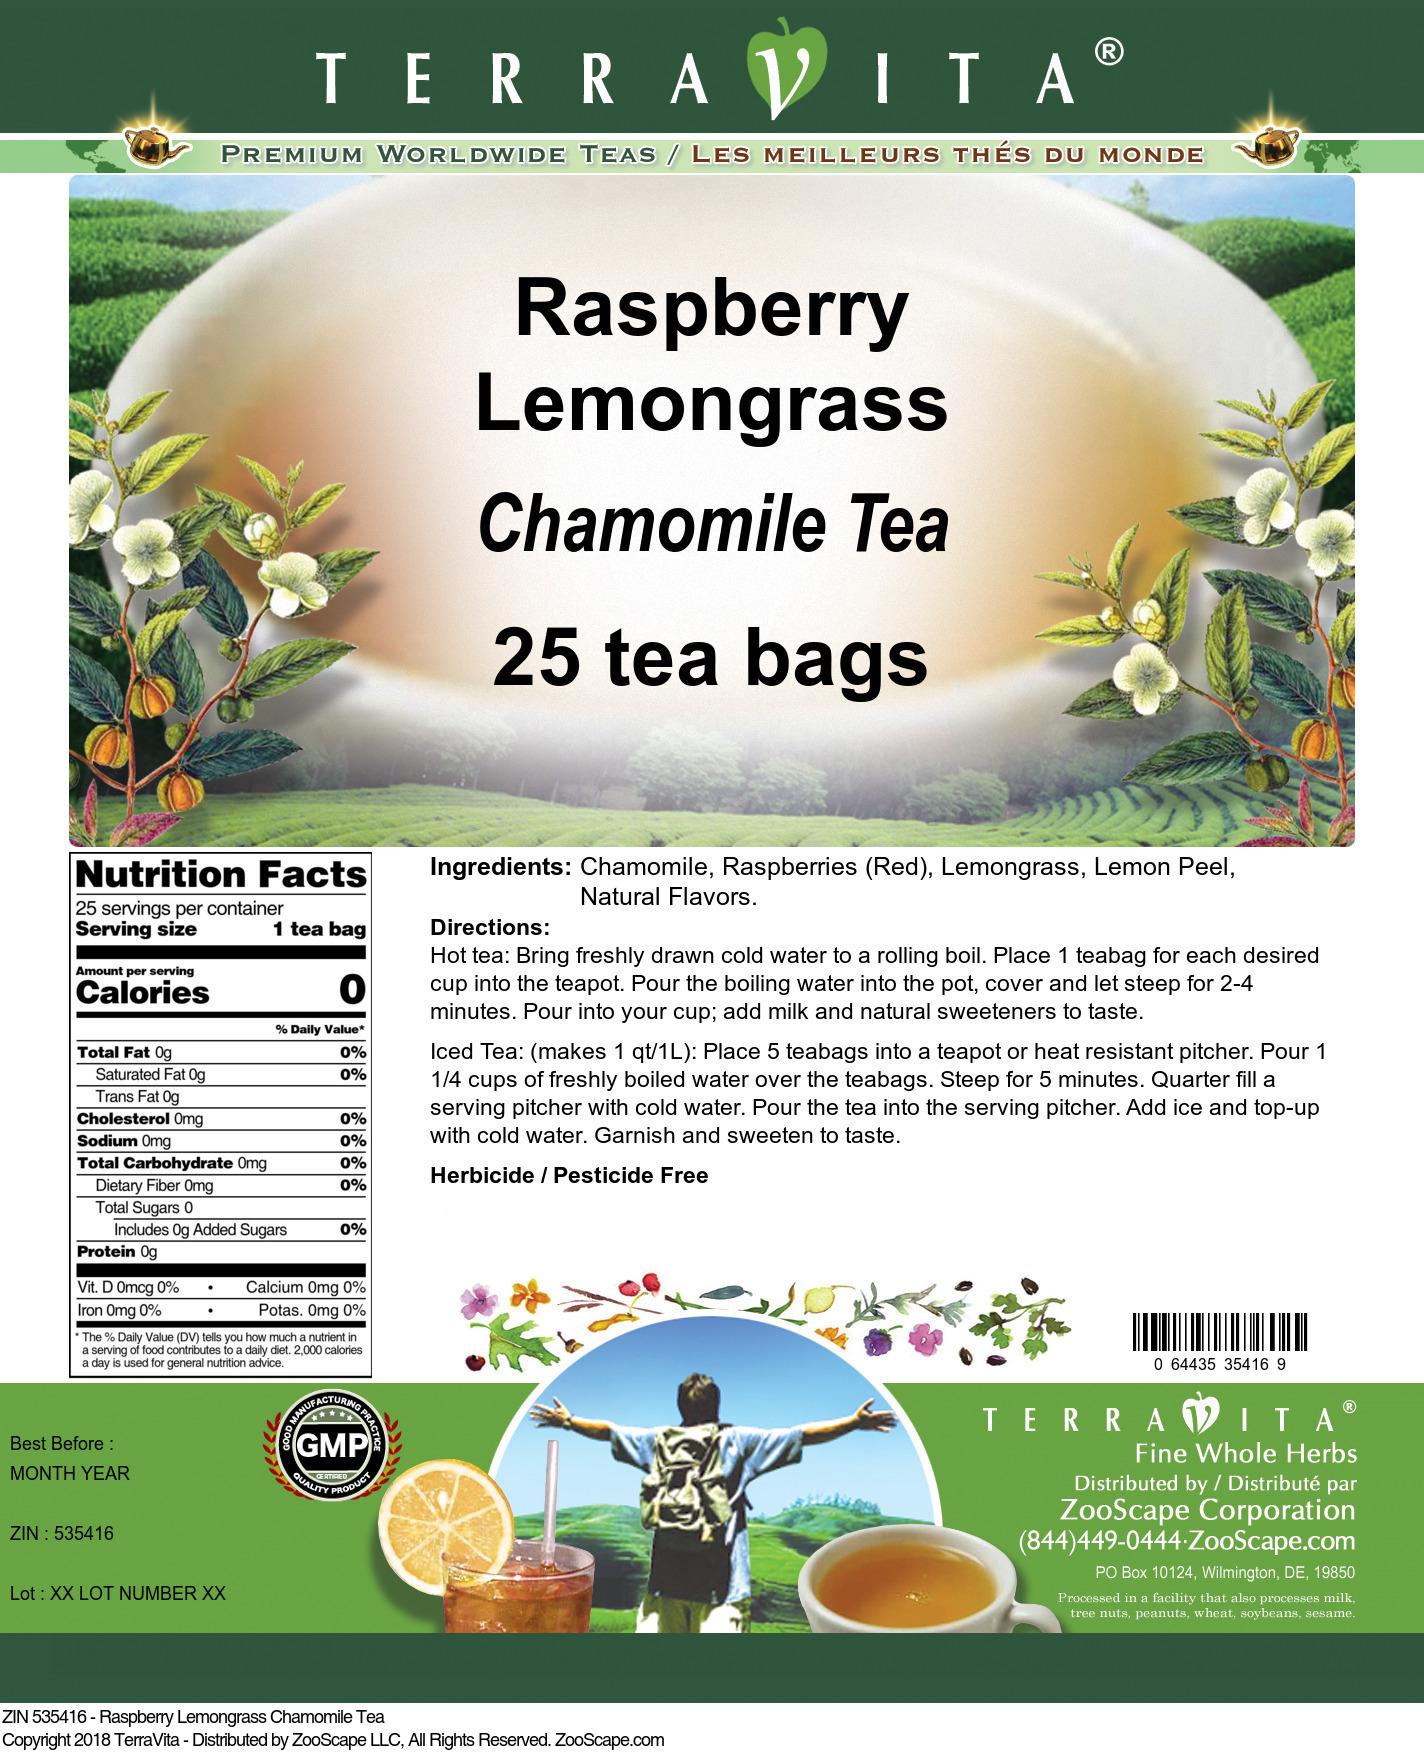 Raspberry Lemongrass Chamomile Tea - Label